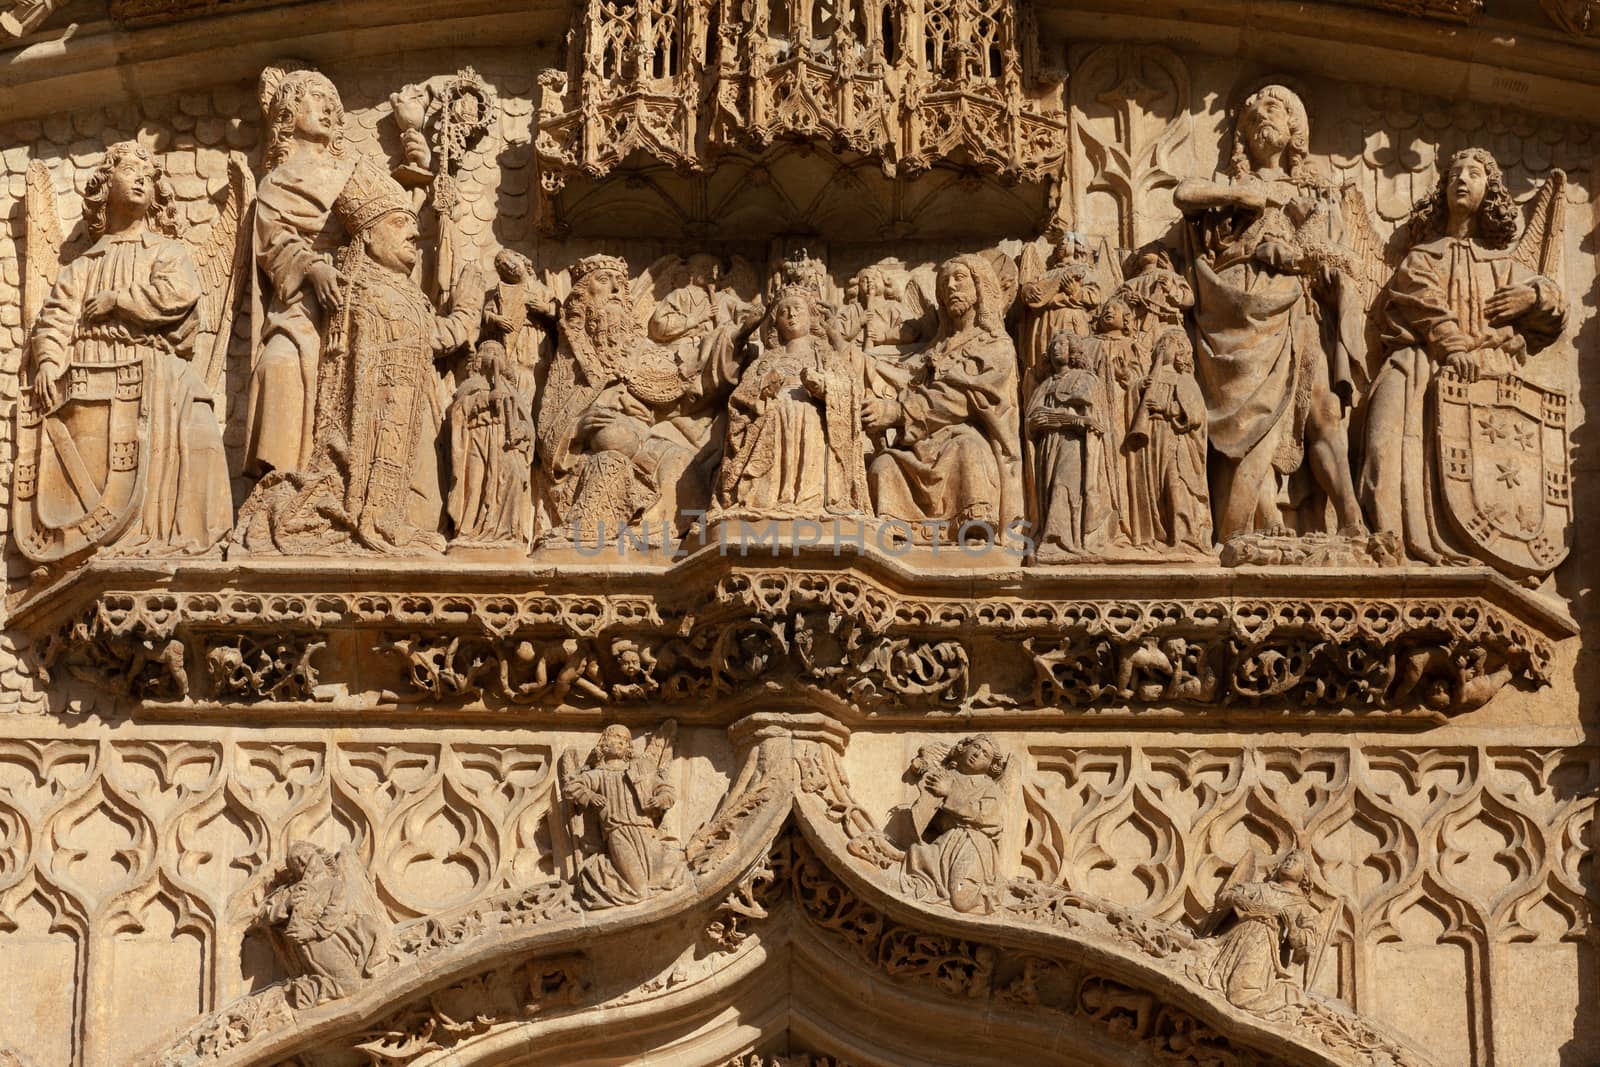 Valladolid, Spain - 8 December 2018: Iglesia de San Pablo (St. Paul's Convent church), Lower facade and Entrance portal